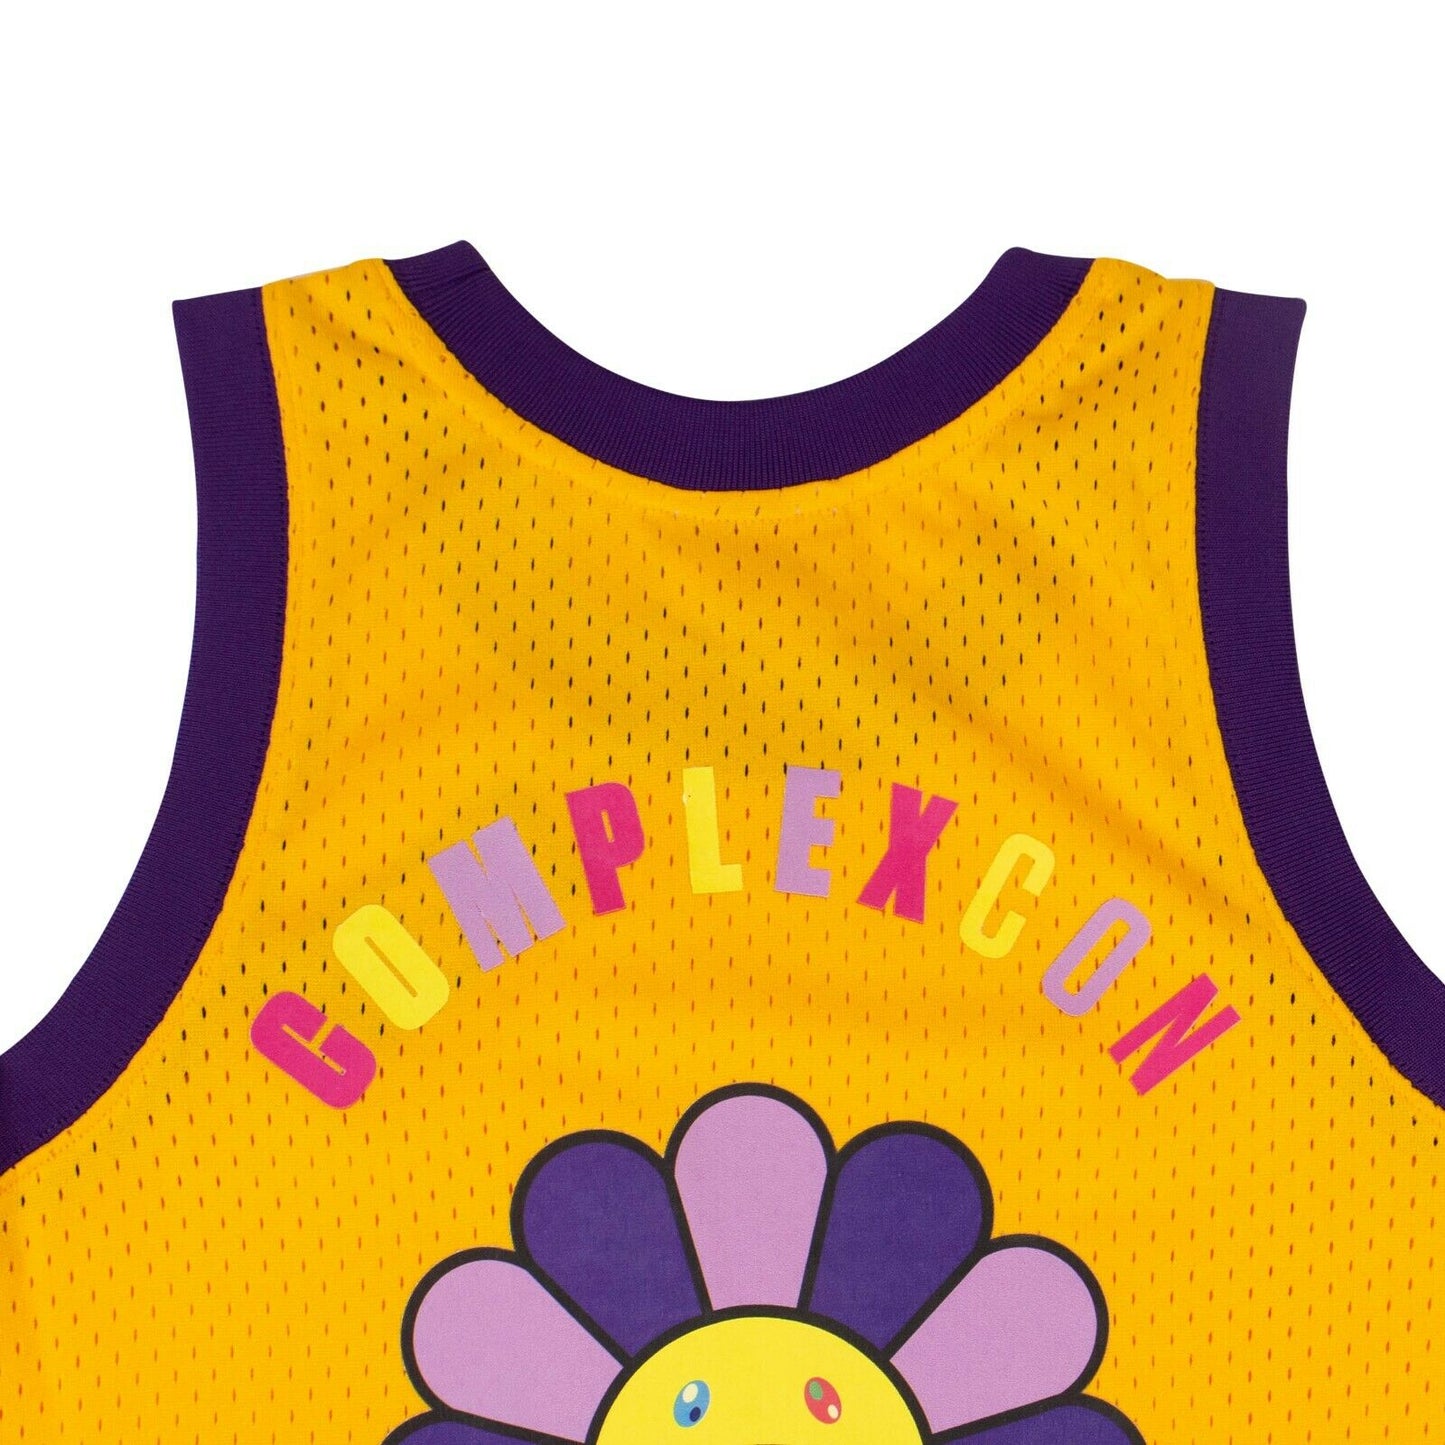 Takashi Murakami X Complexcon 'La Lakers' Basketball Jersey - Yellow